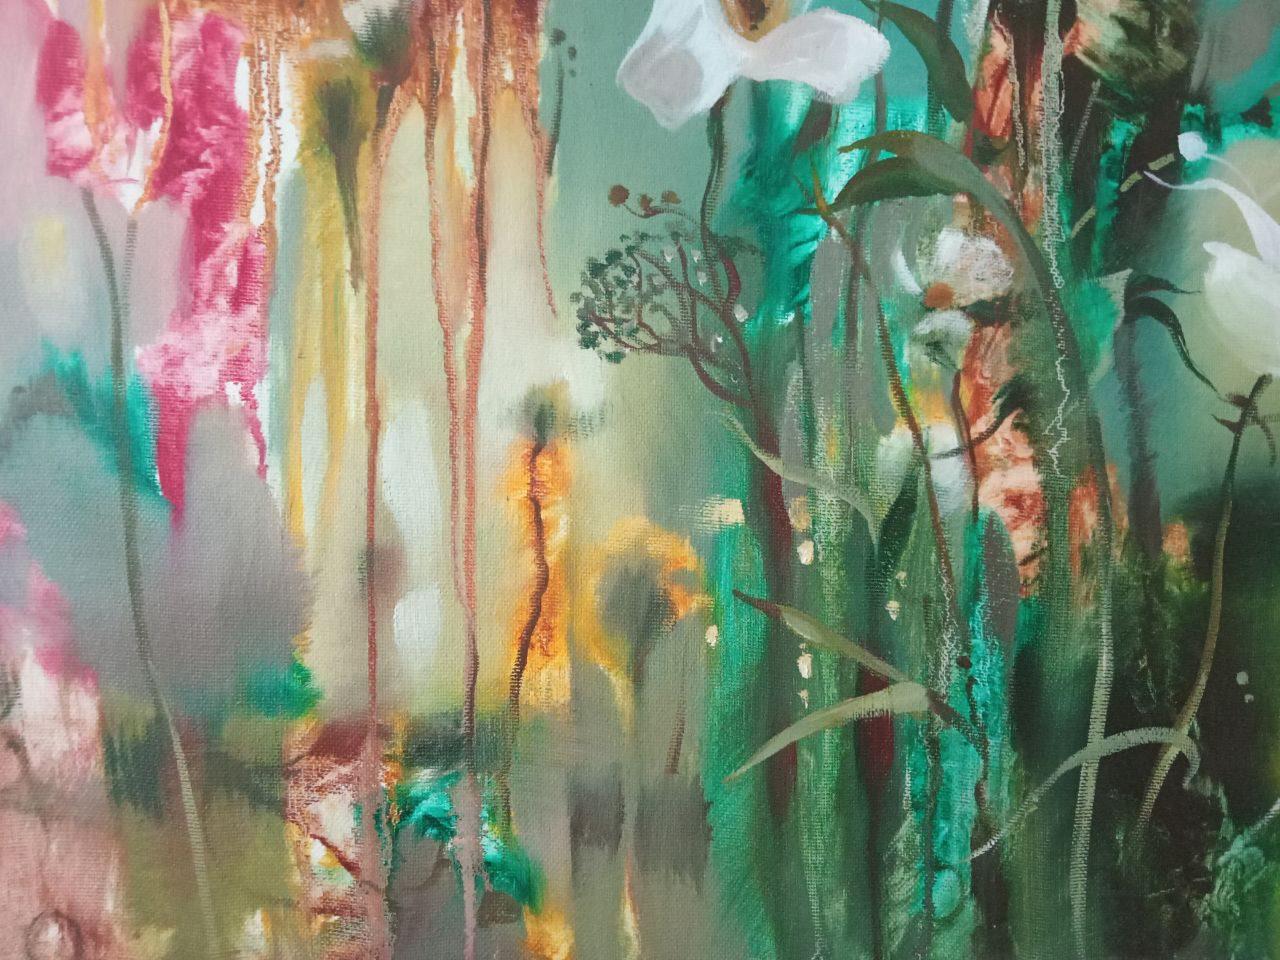 Artist: Anatoly Borisovich Tarabanov
Work: Original oil painting, handmade artwork, one of a kind 
Medium: Oil on Canvas 
Year: 2017
Style: Impressionism
Title: Flowers
Size: 25.5